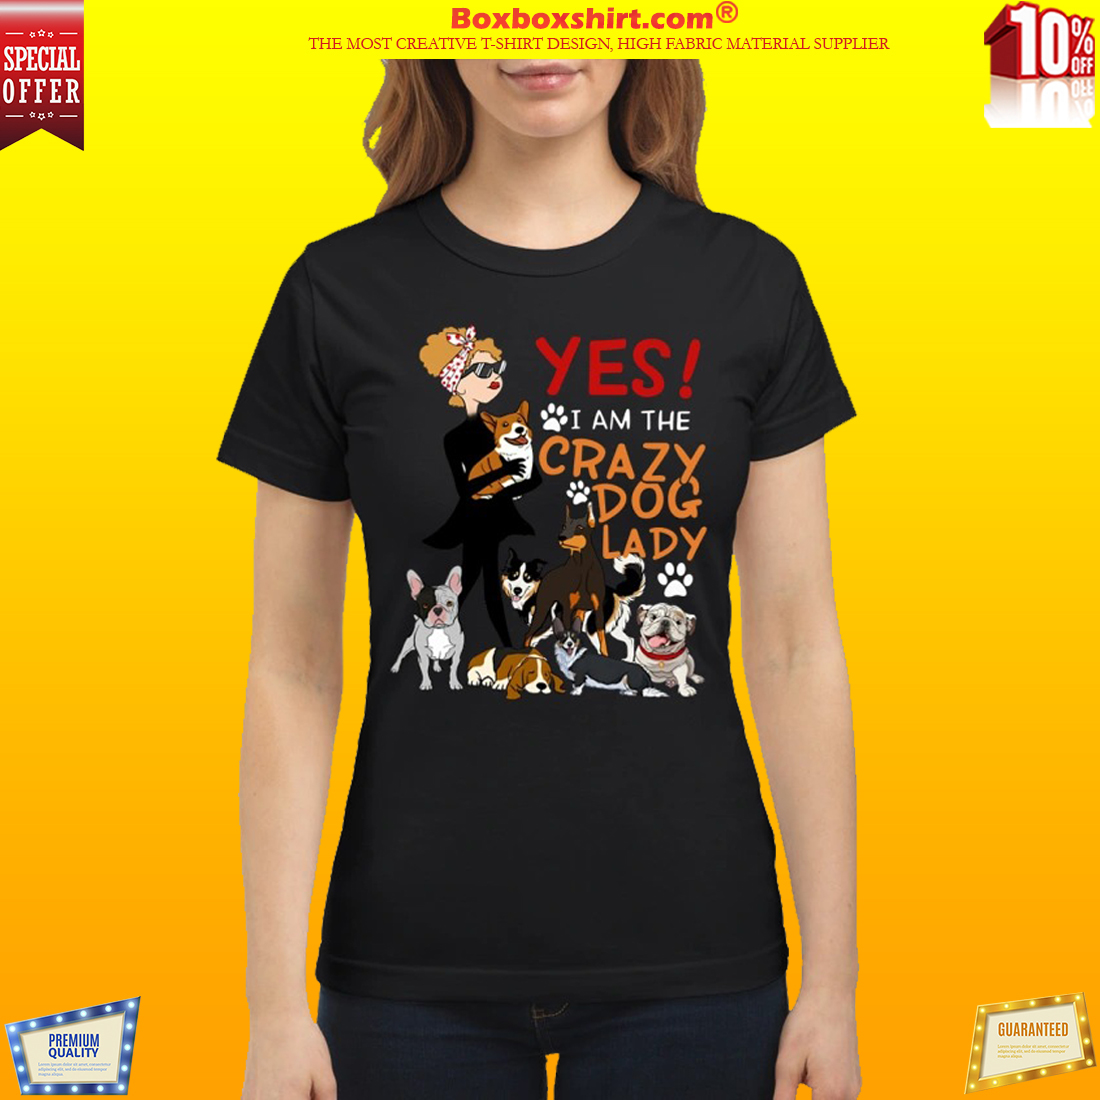 Yes I am the crazy dog lady classic shirt